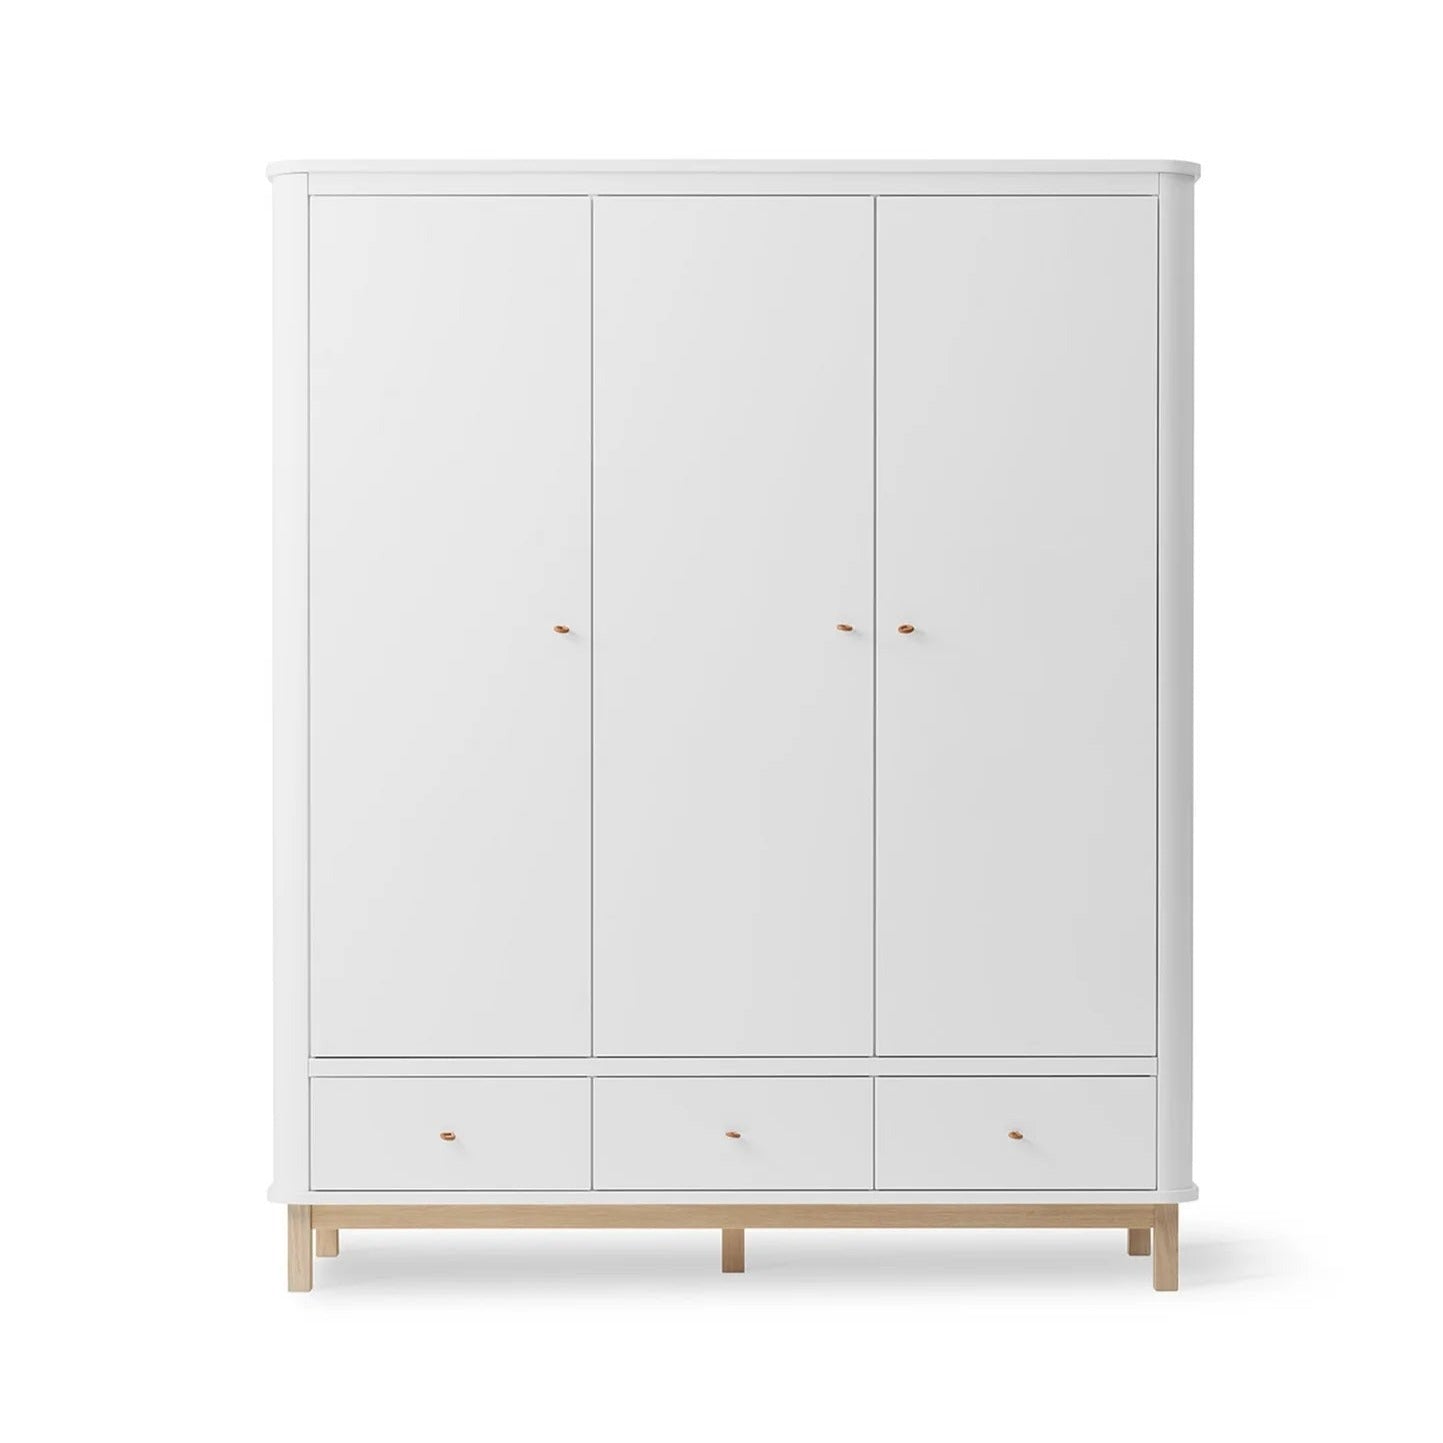 Oliver Furniture Wood Wardrobe - 3 Doors - White/Oak